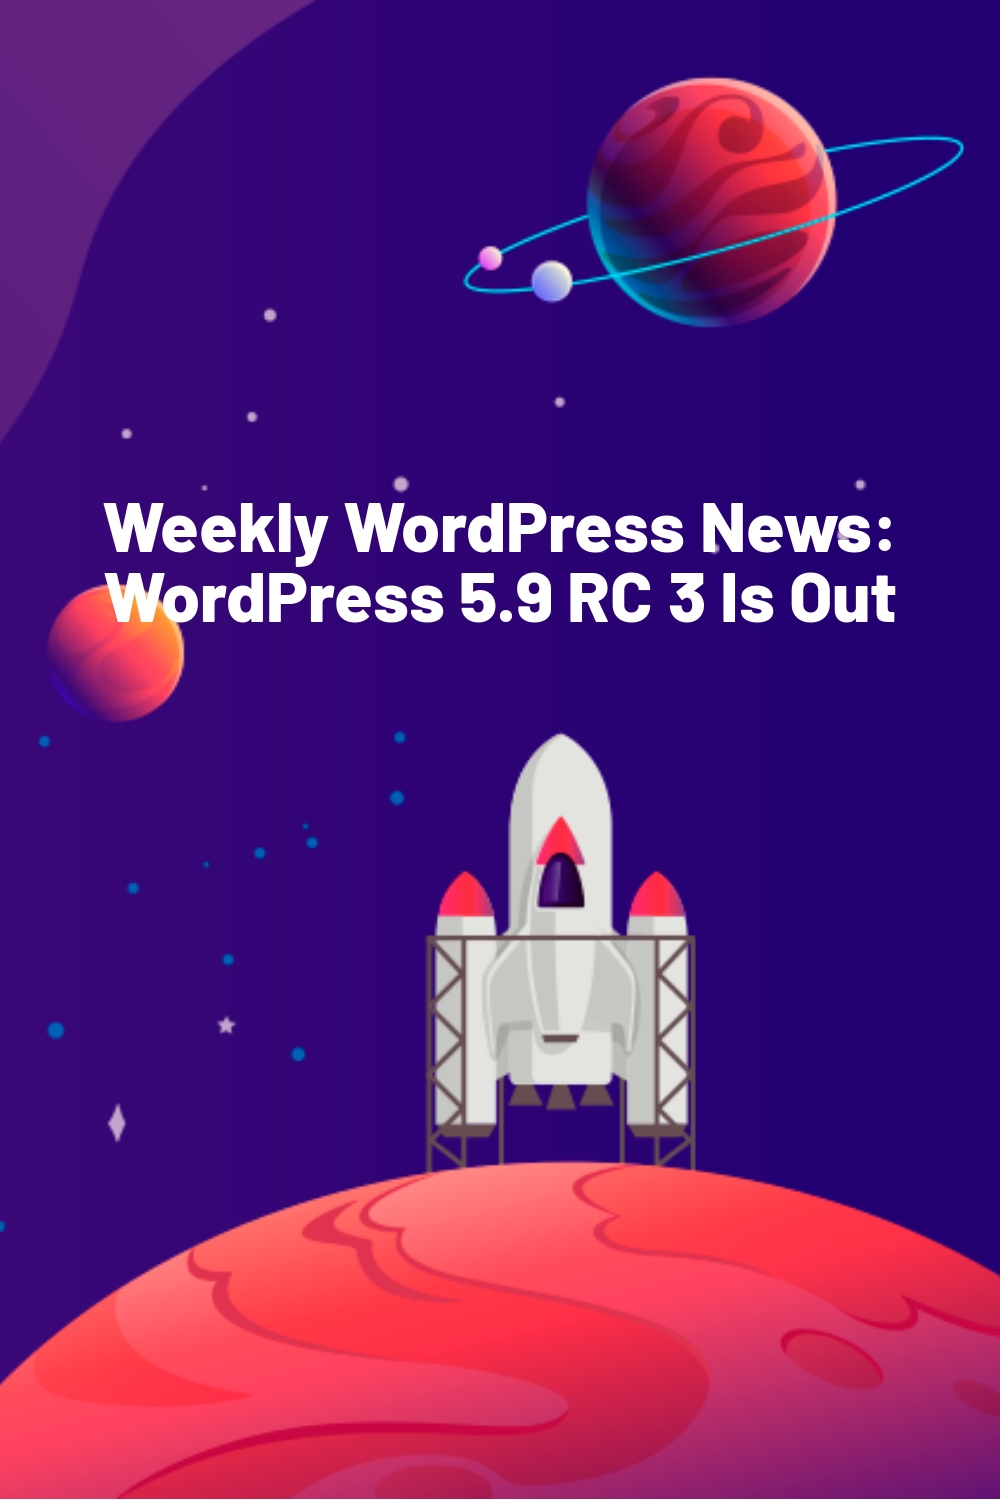 Weekly WordPress News: WordPress 5.9 RC 3 Is Out